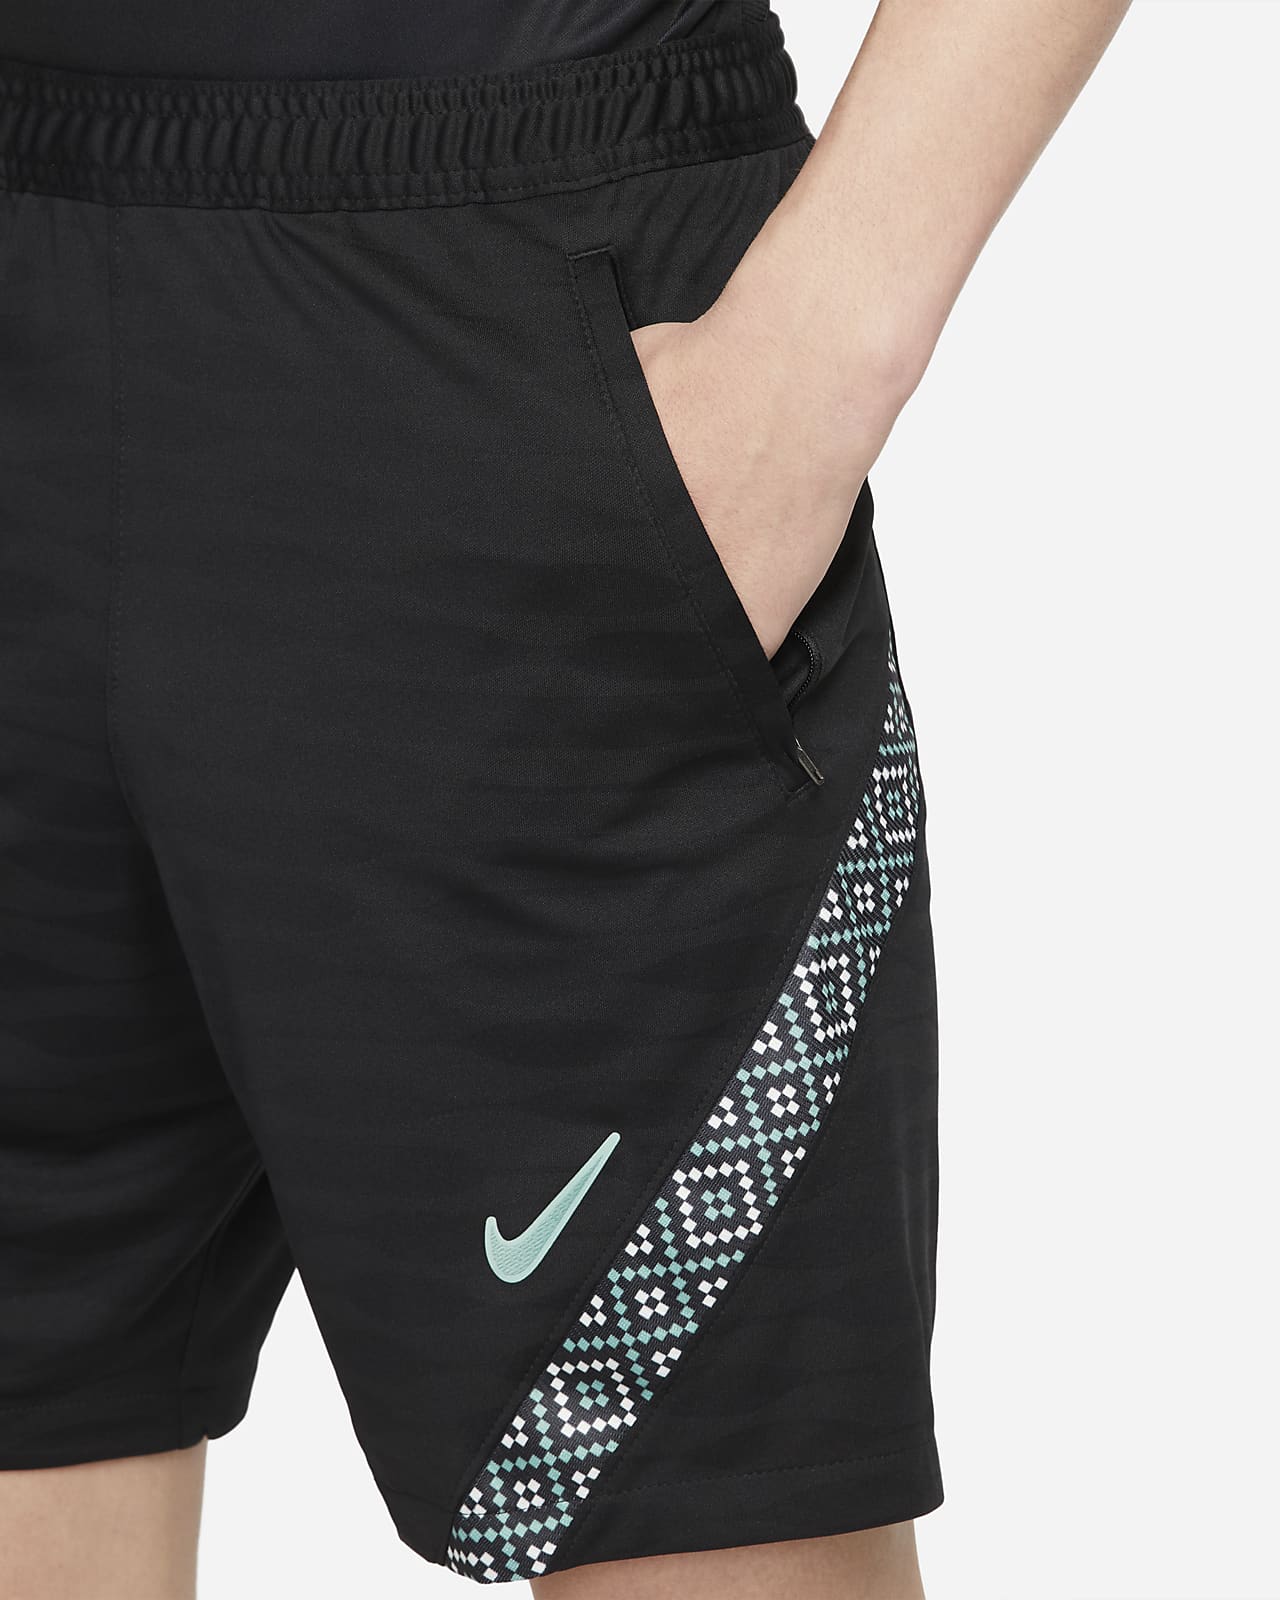 Club Strike Nike Dri-FIT Soccer Shorts.